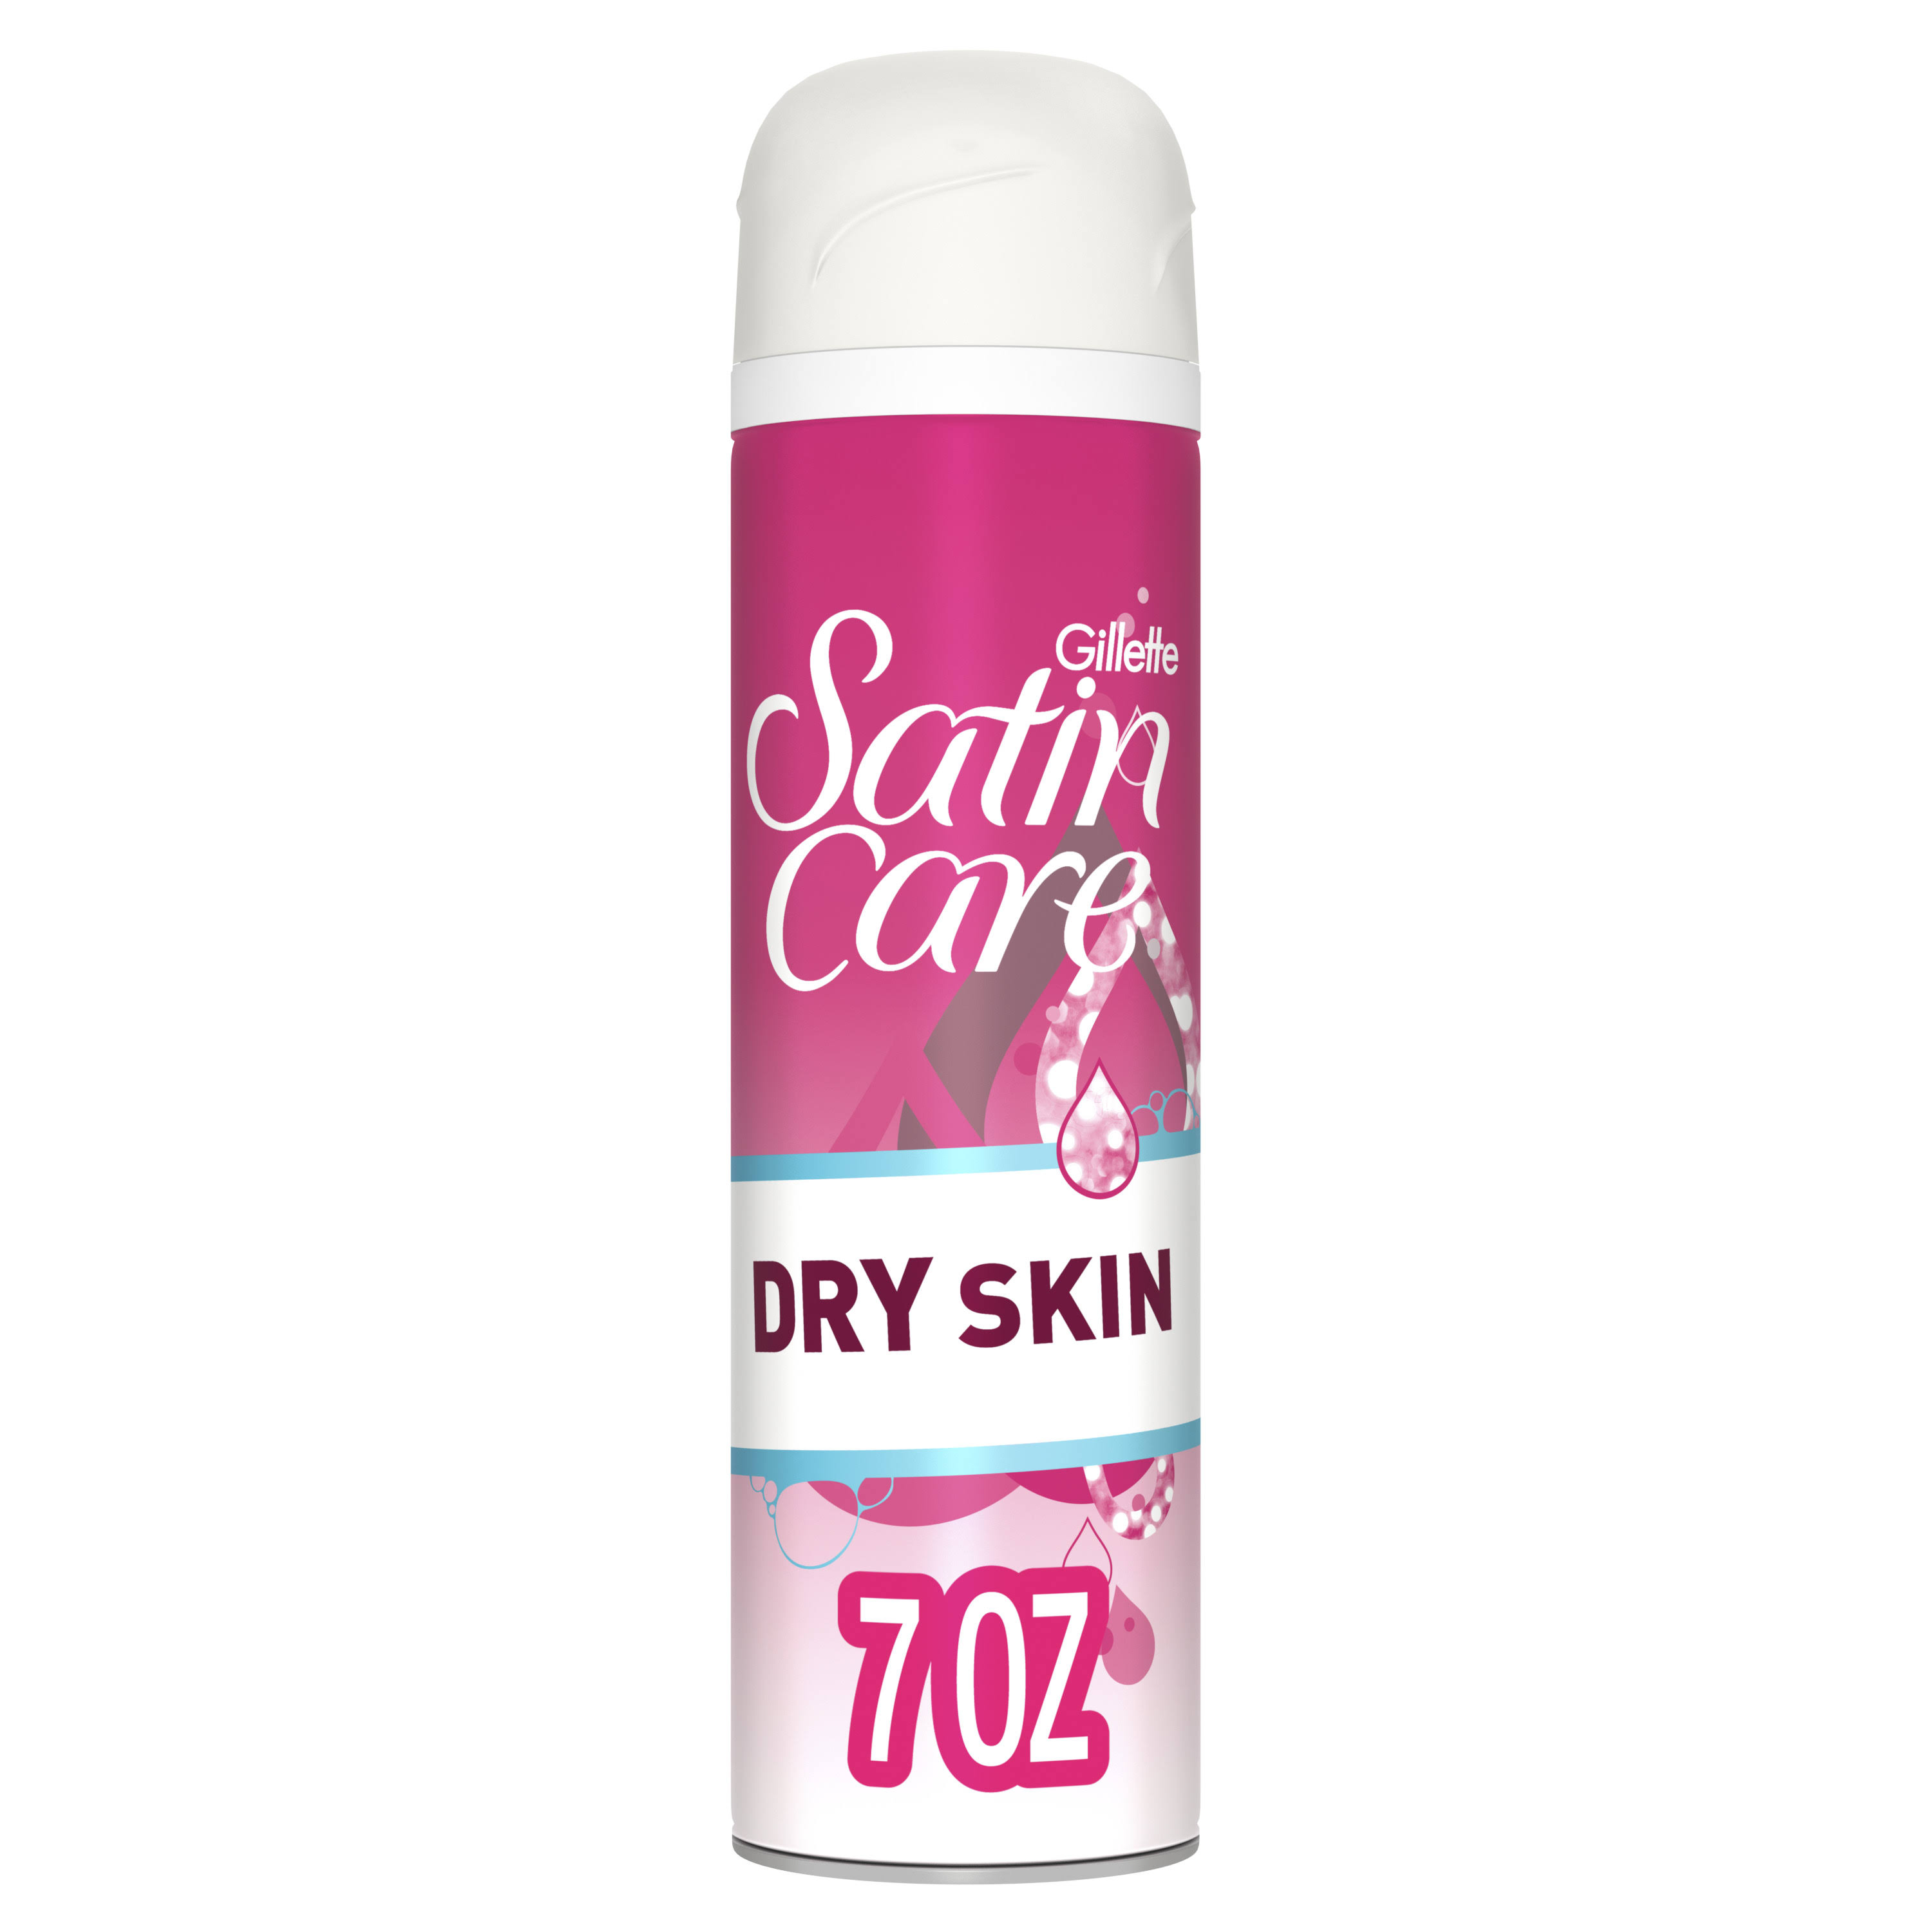 Gillette Satin Care Dry Skin Shave Gel - for Women, 210ml